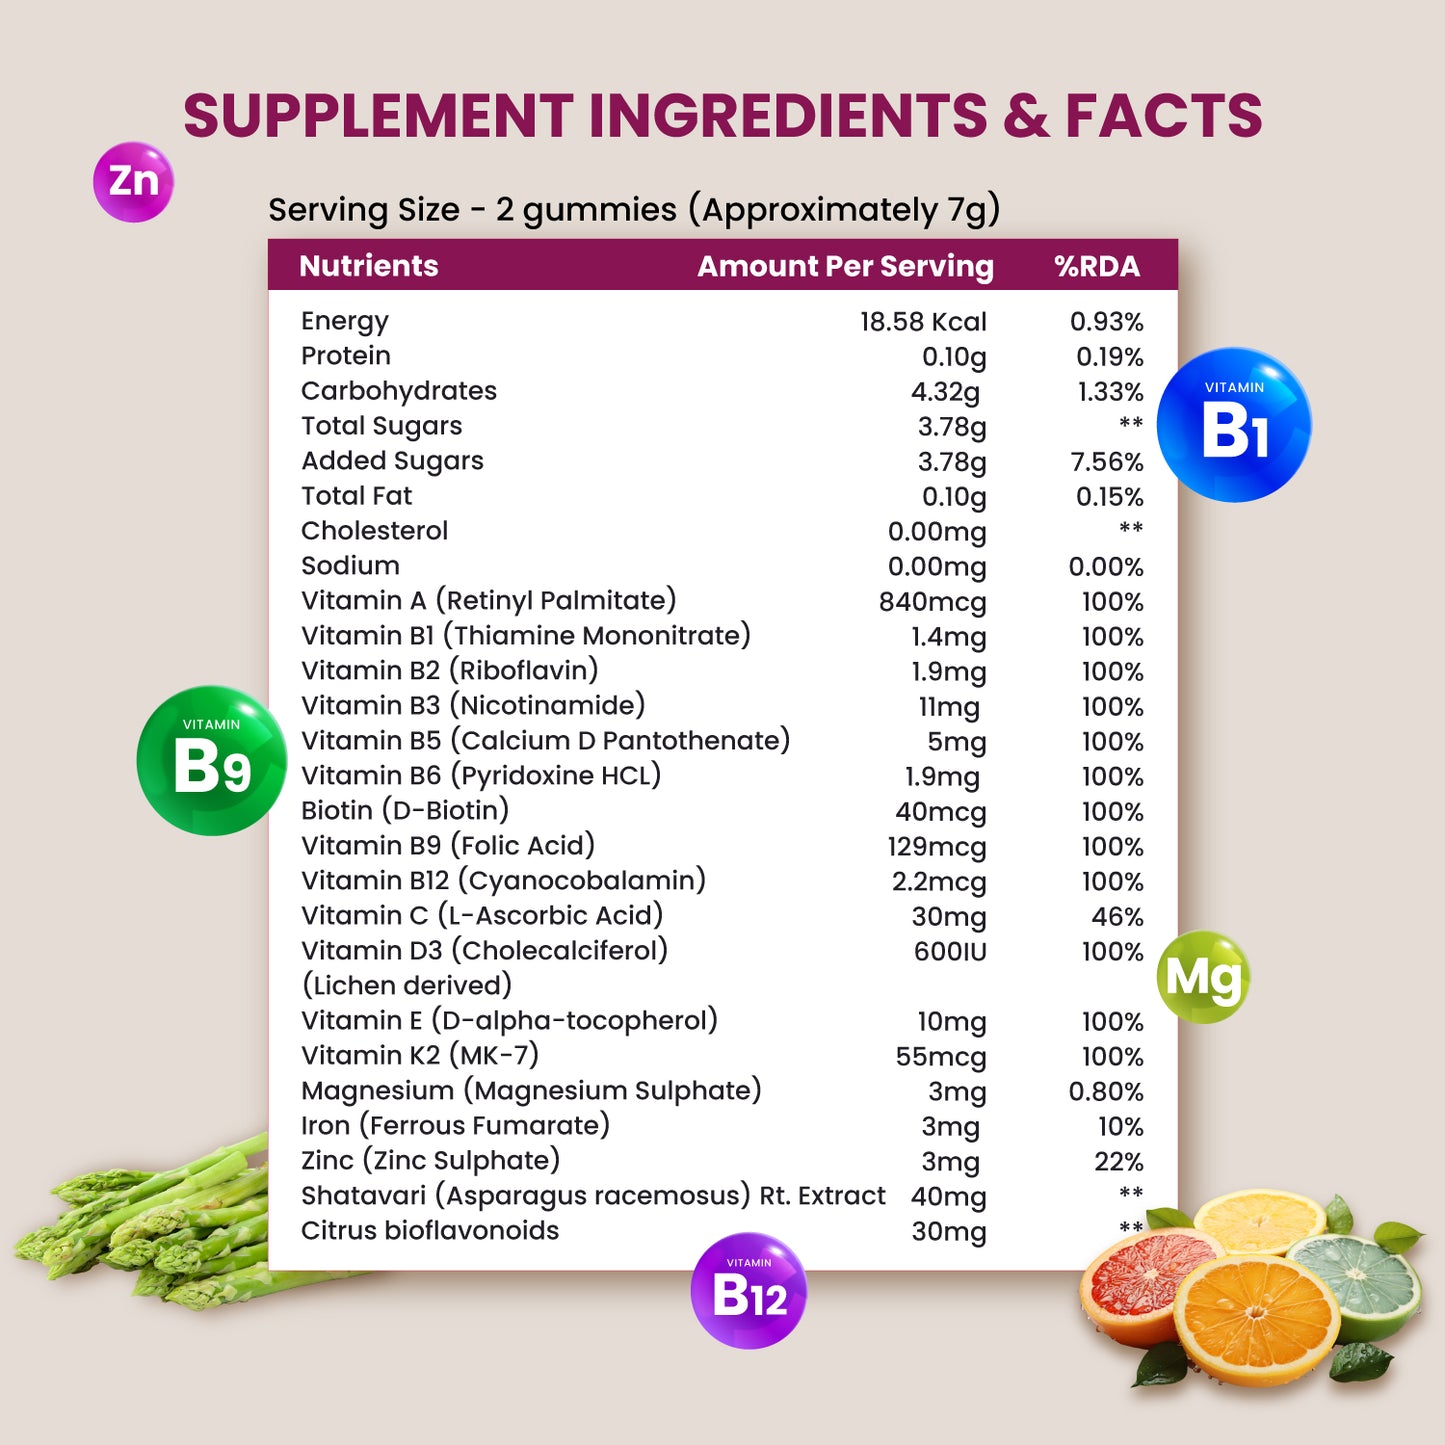 Himalayan Organics Multivitamin Gummies with Shatavari And Biotin, Vitamin A,B1, B2, B3, B5, B6,B9, B12, C, D3 K2, E, Magnesium, Iron, Zinc - 60 Gummies for women